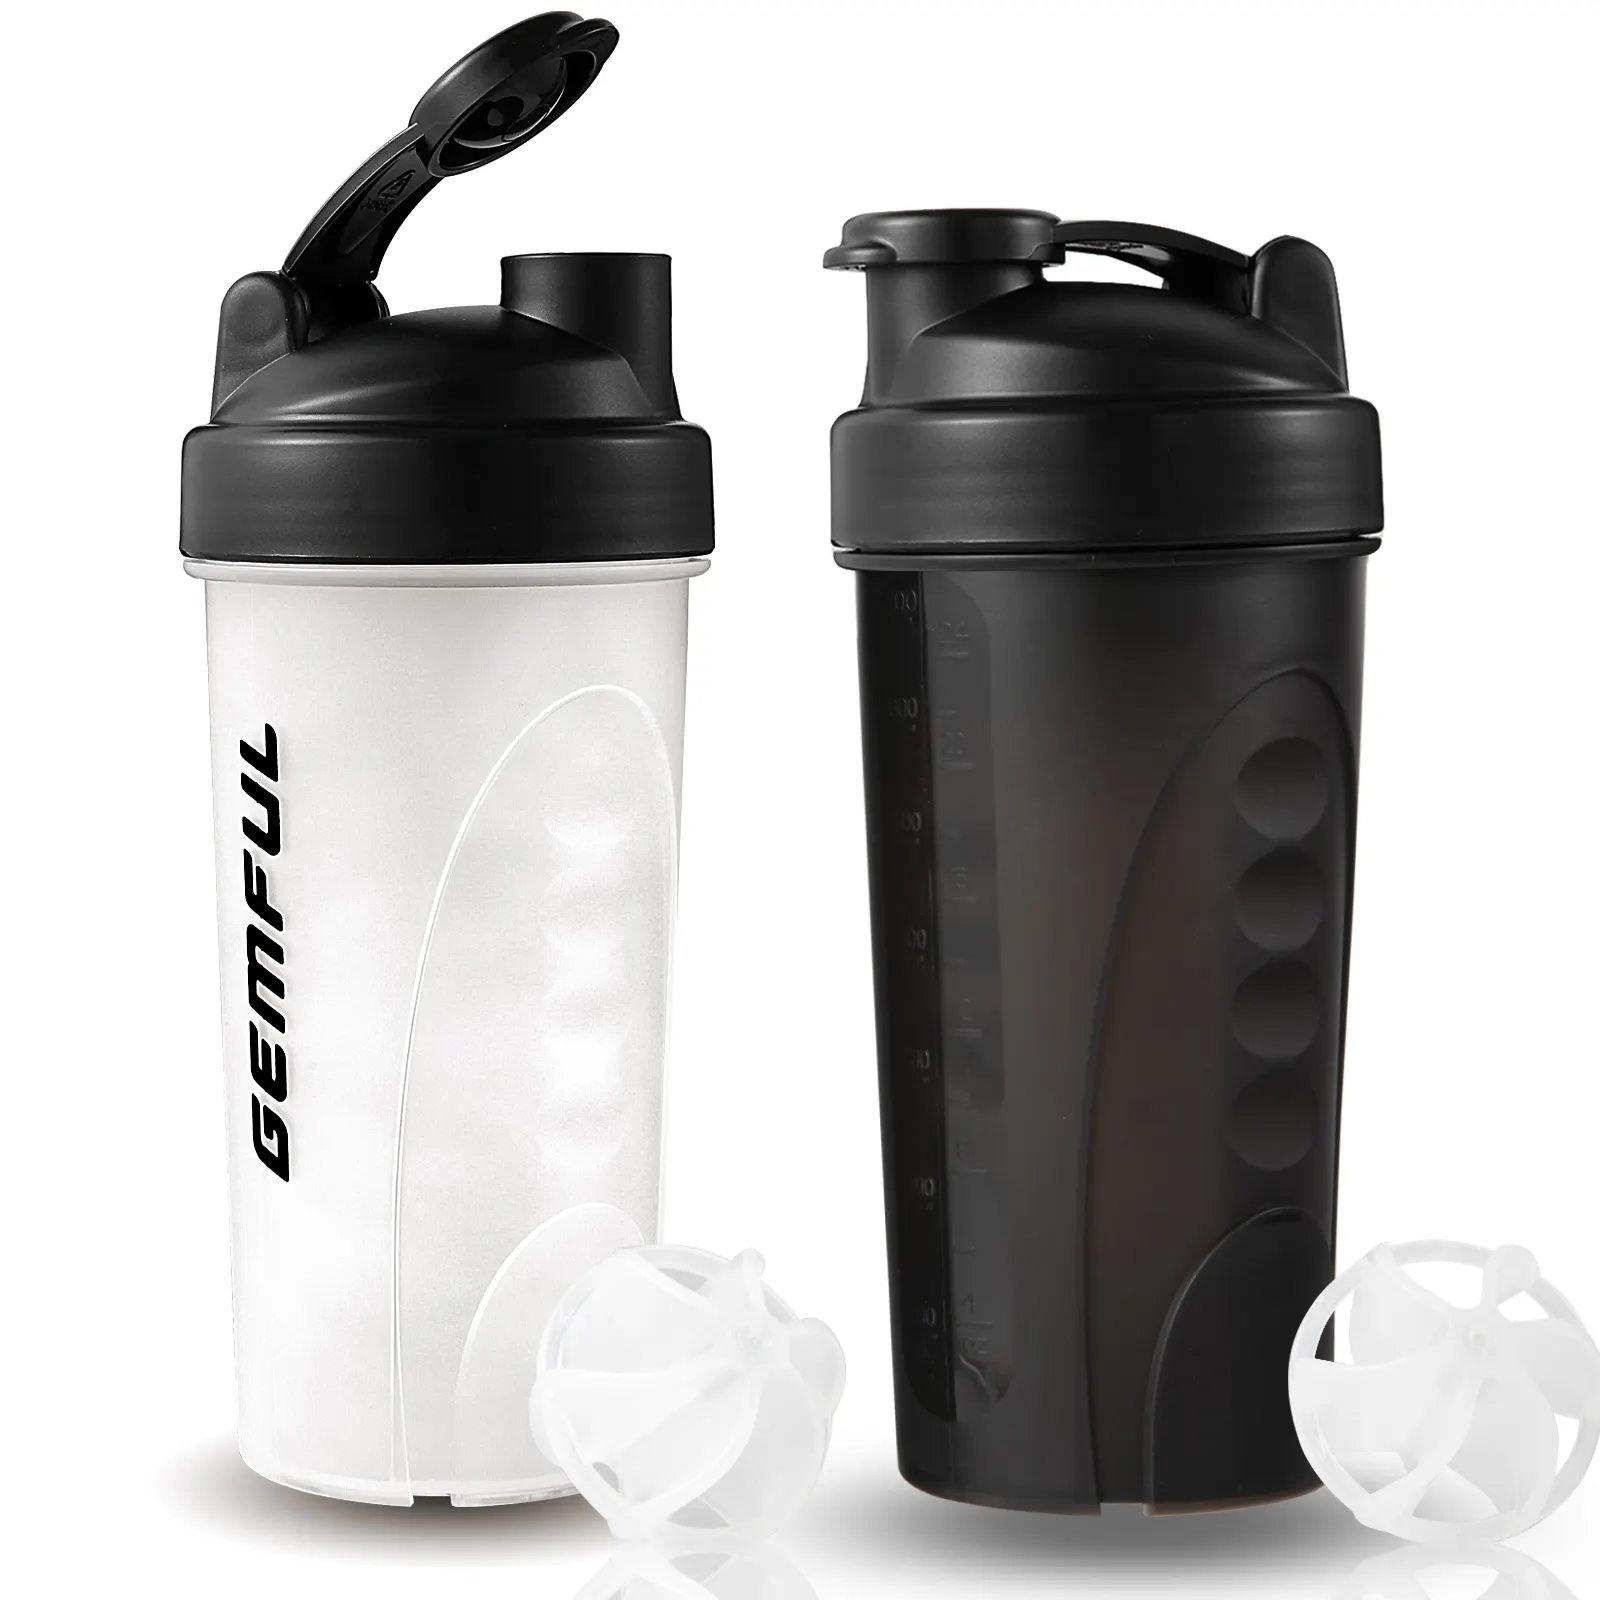 Botella agitadora de proteínas de 750ml con bola mezcladora, Material PP, tapa para beber directamente para gimnasio, Fitness, viajes, suplementos al aire libre